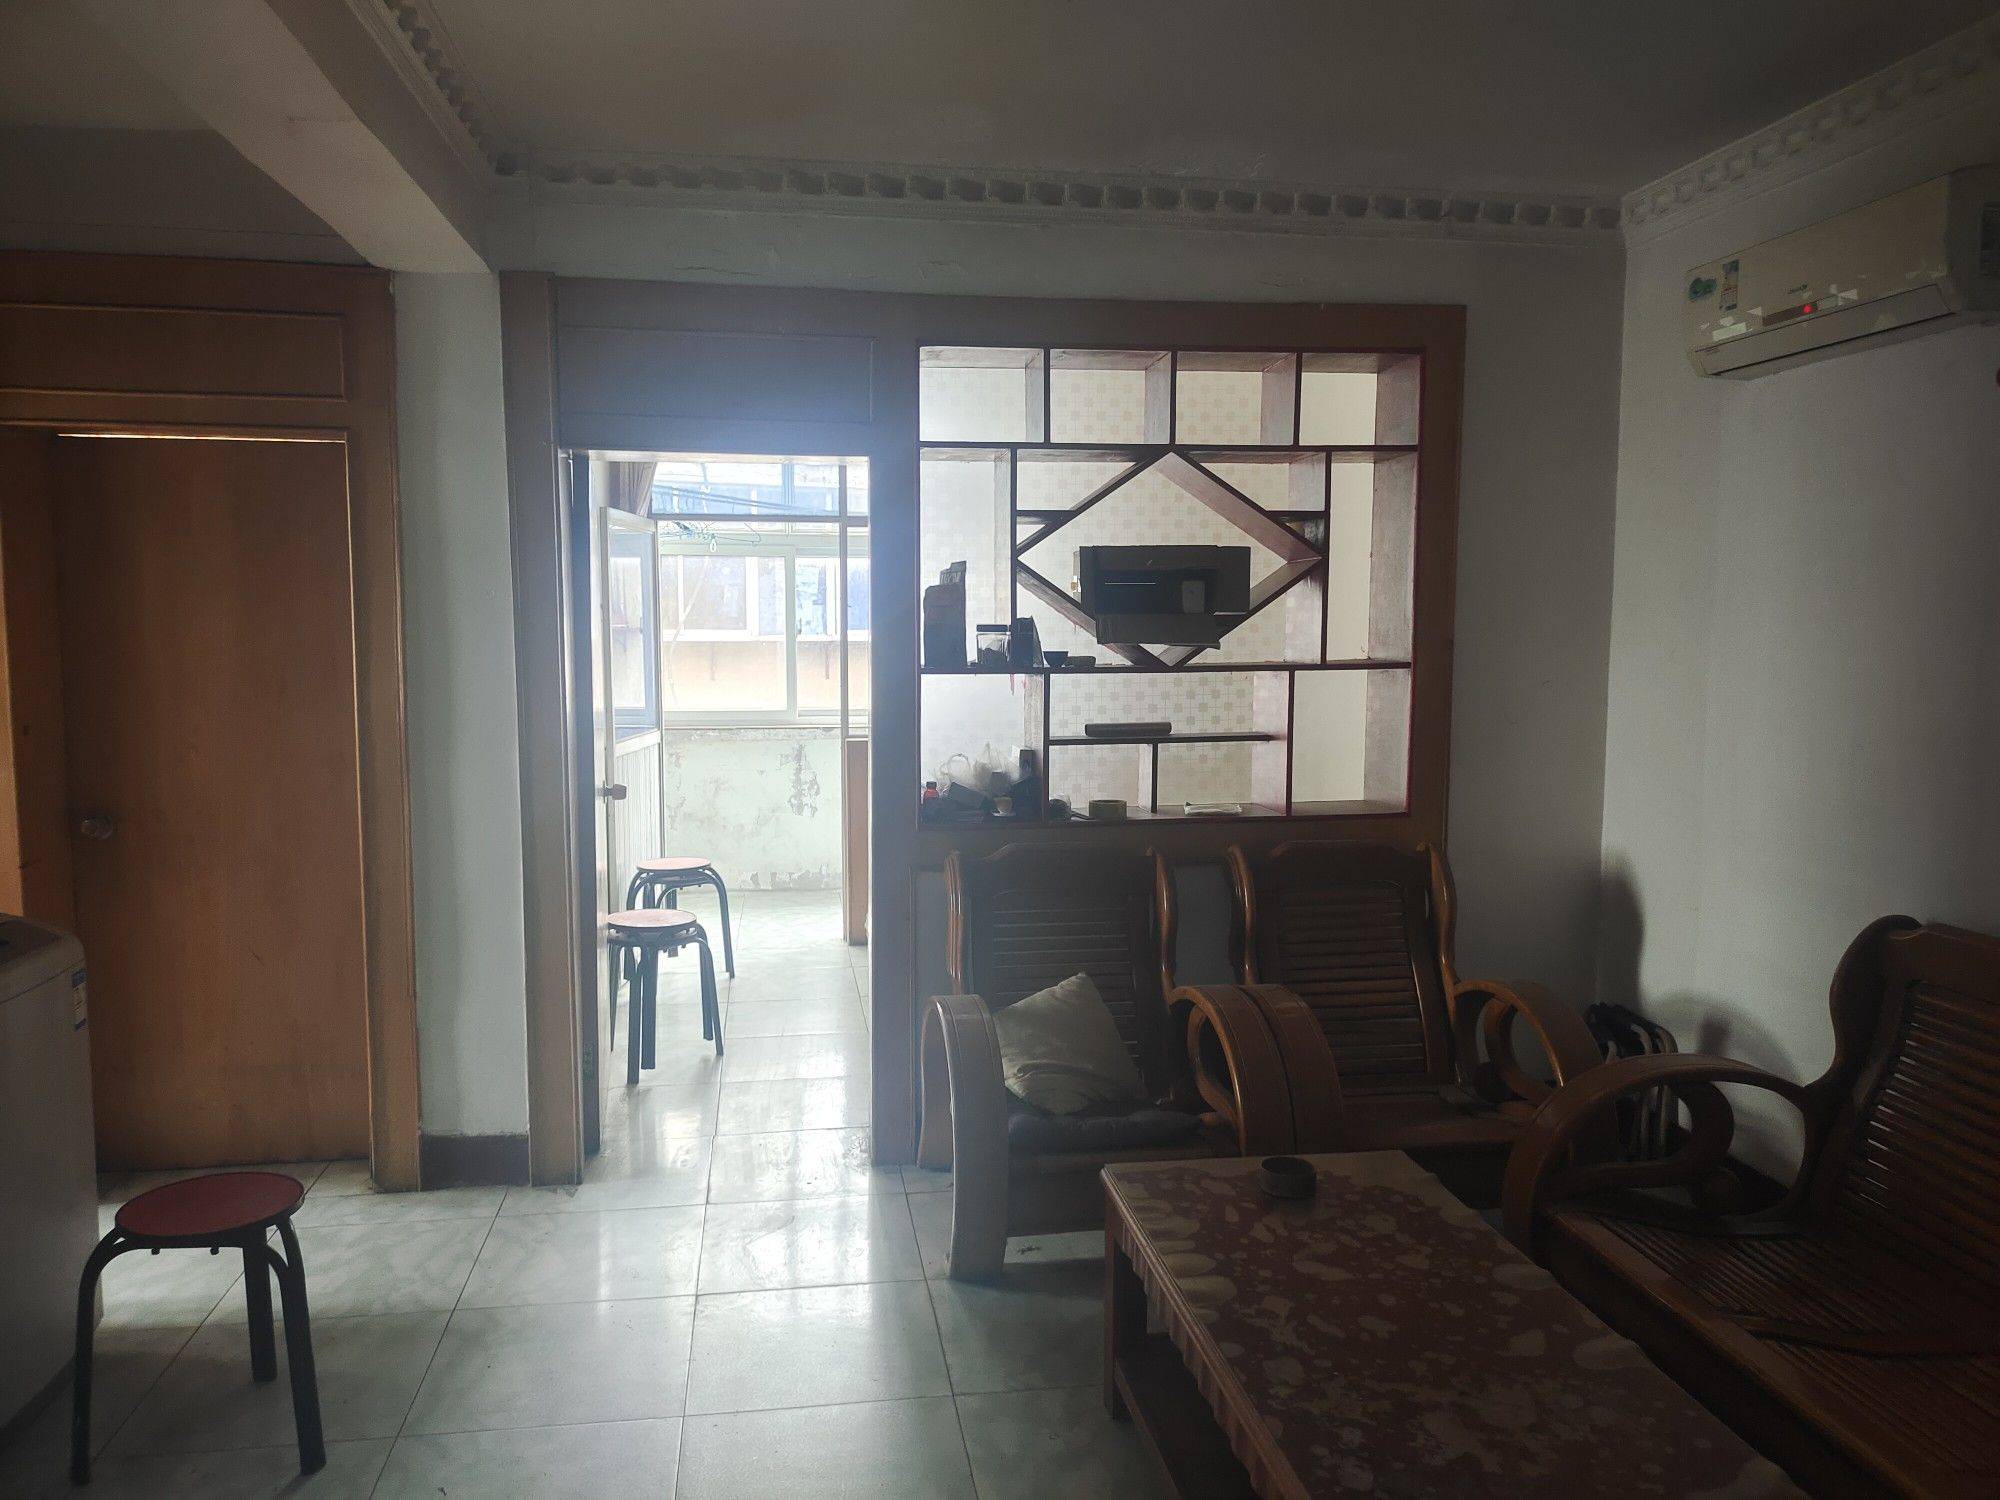 Zhengzhou-Guancheng-Cozy Home,Clean&Comfy,Hustle & Bustle,Chilled,LGBTQ Friendly